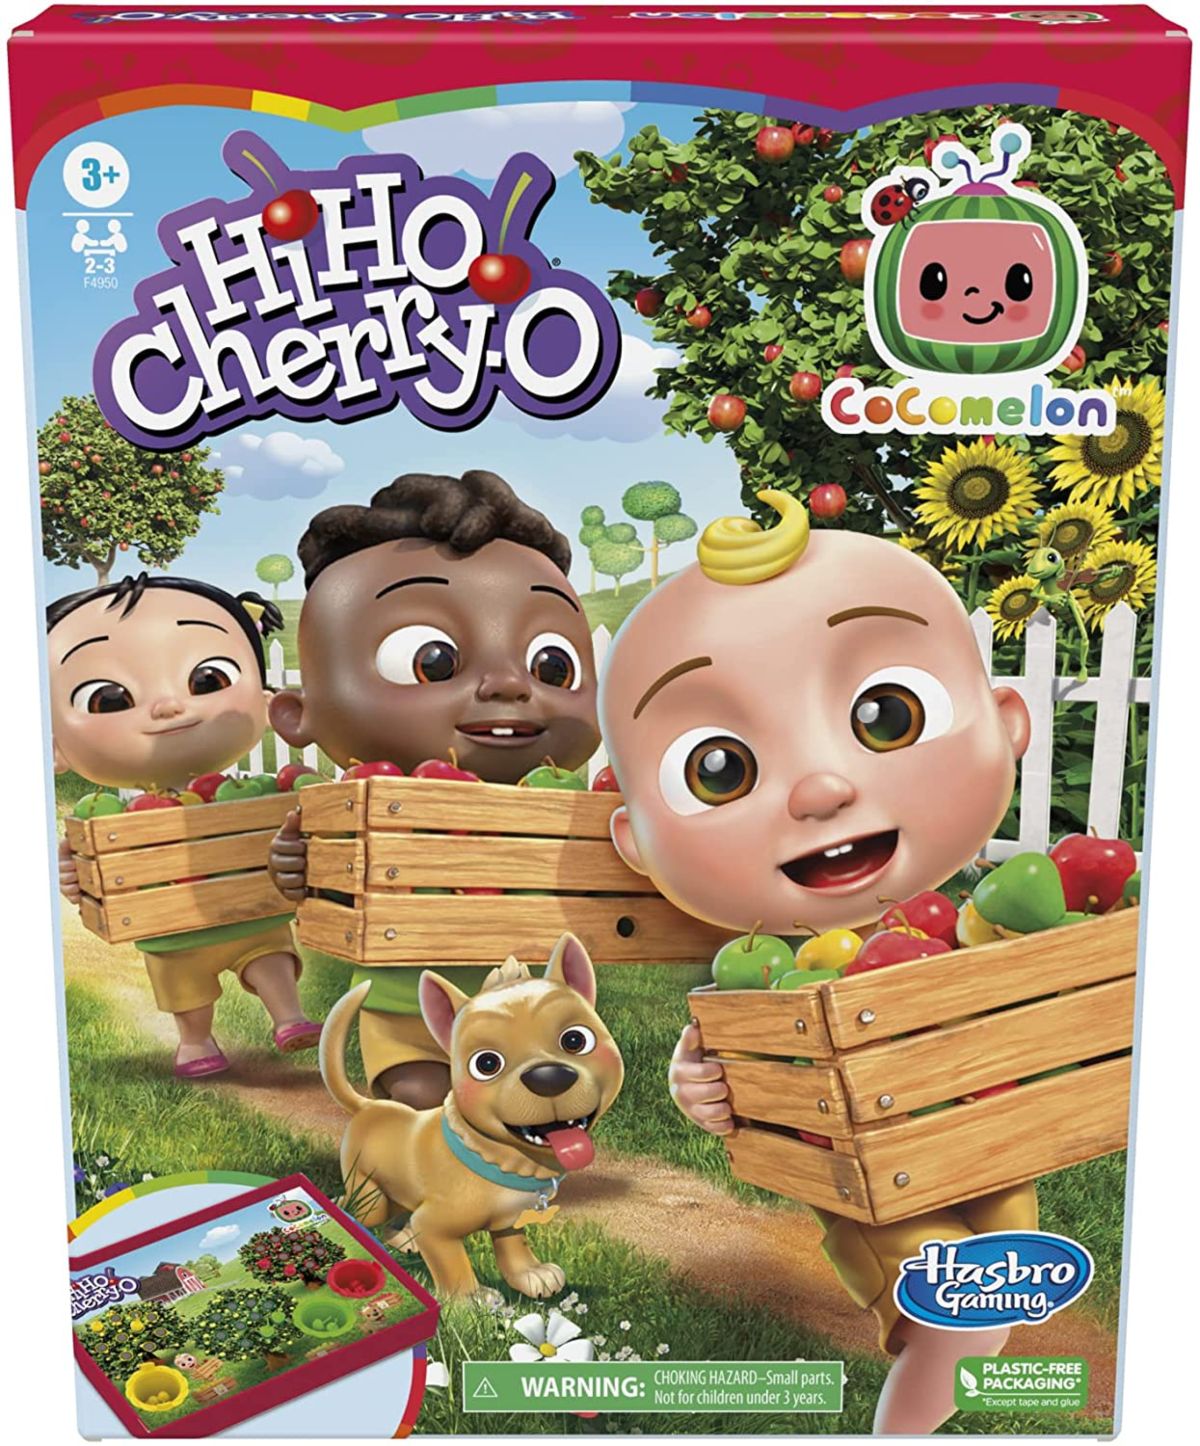 HiHo Cherry-O